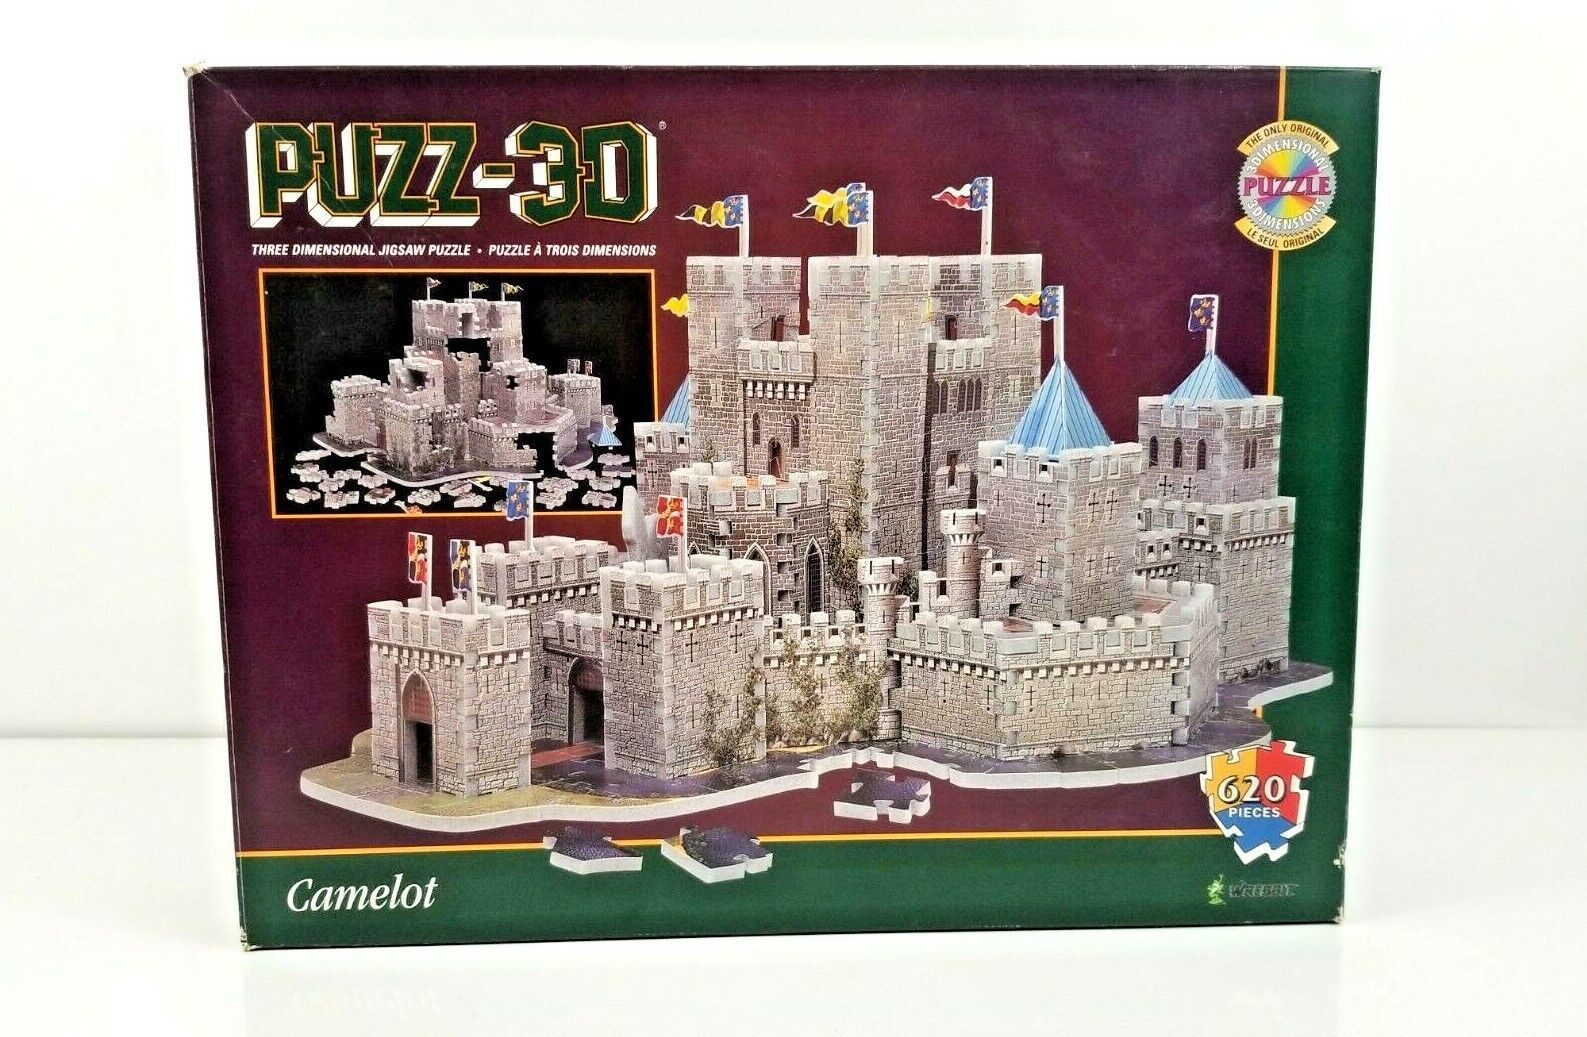 PUZZ 3D CAMELOT Jigsaw Puzzle 3 Dimensional 620 Pieces Wrebbit 1995 NEW Open Box - $32.99